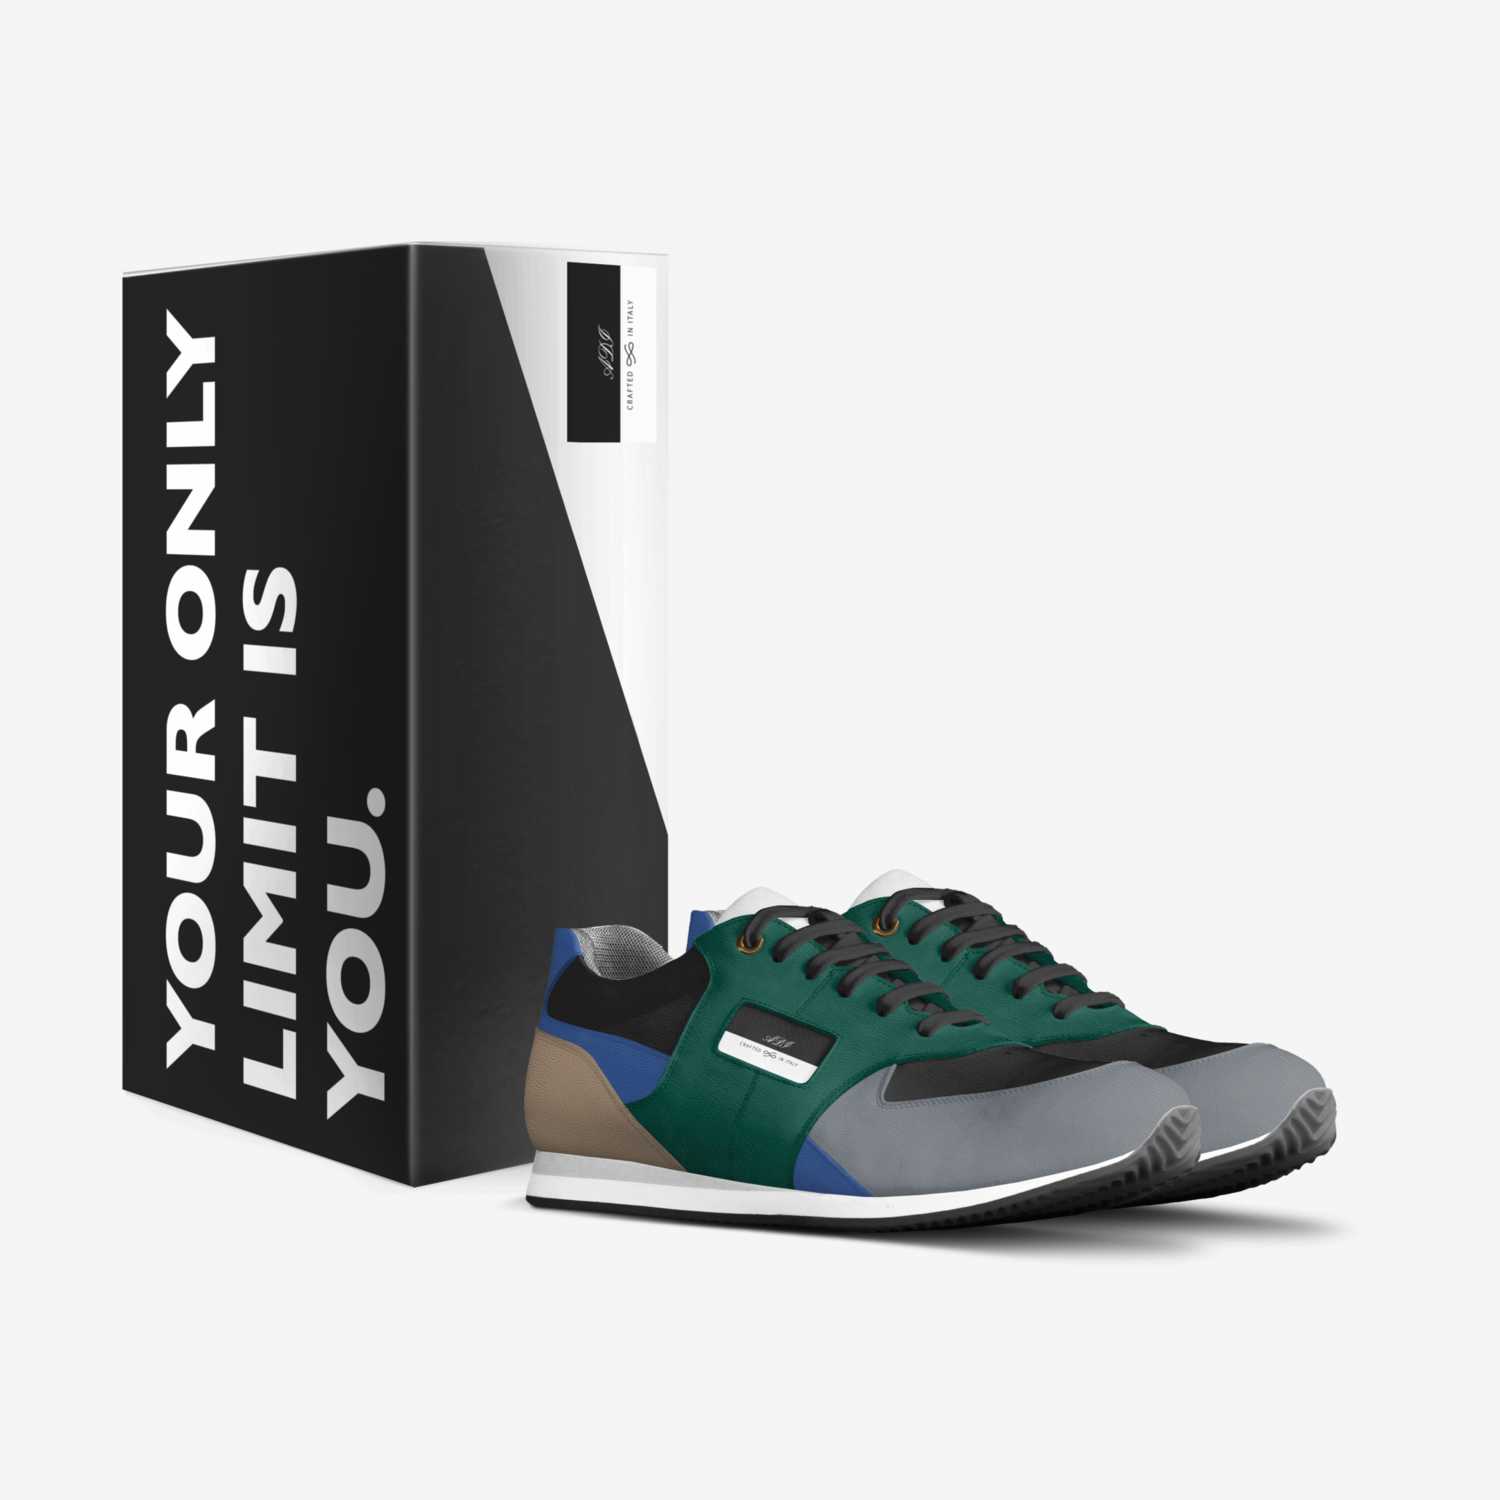 ADI custom made in Italy shoes by Aditya Nair | Box view